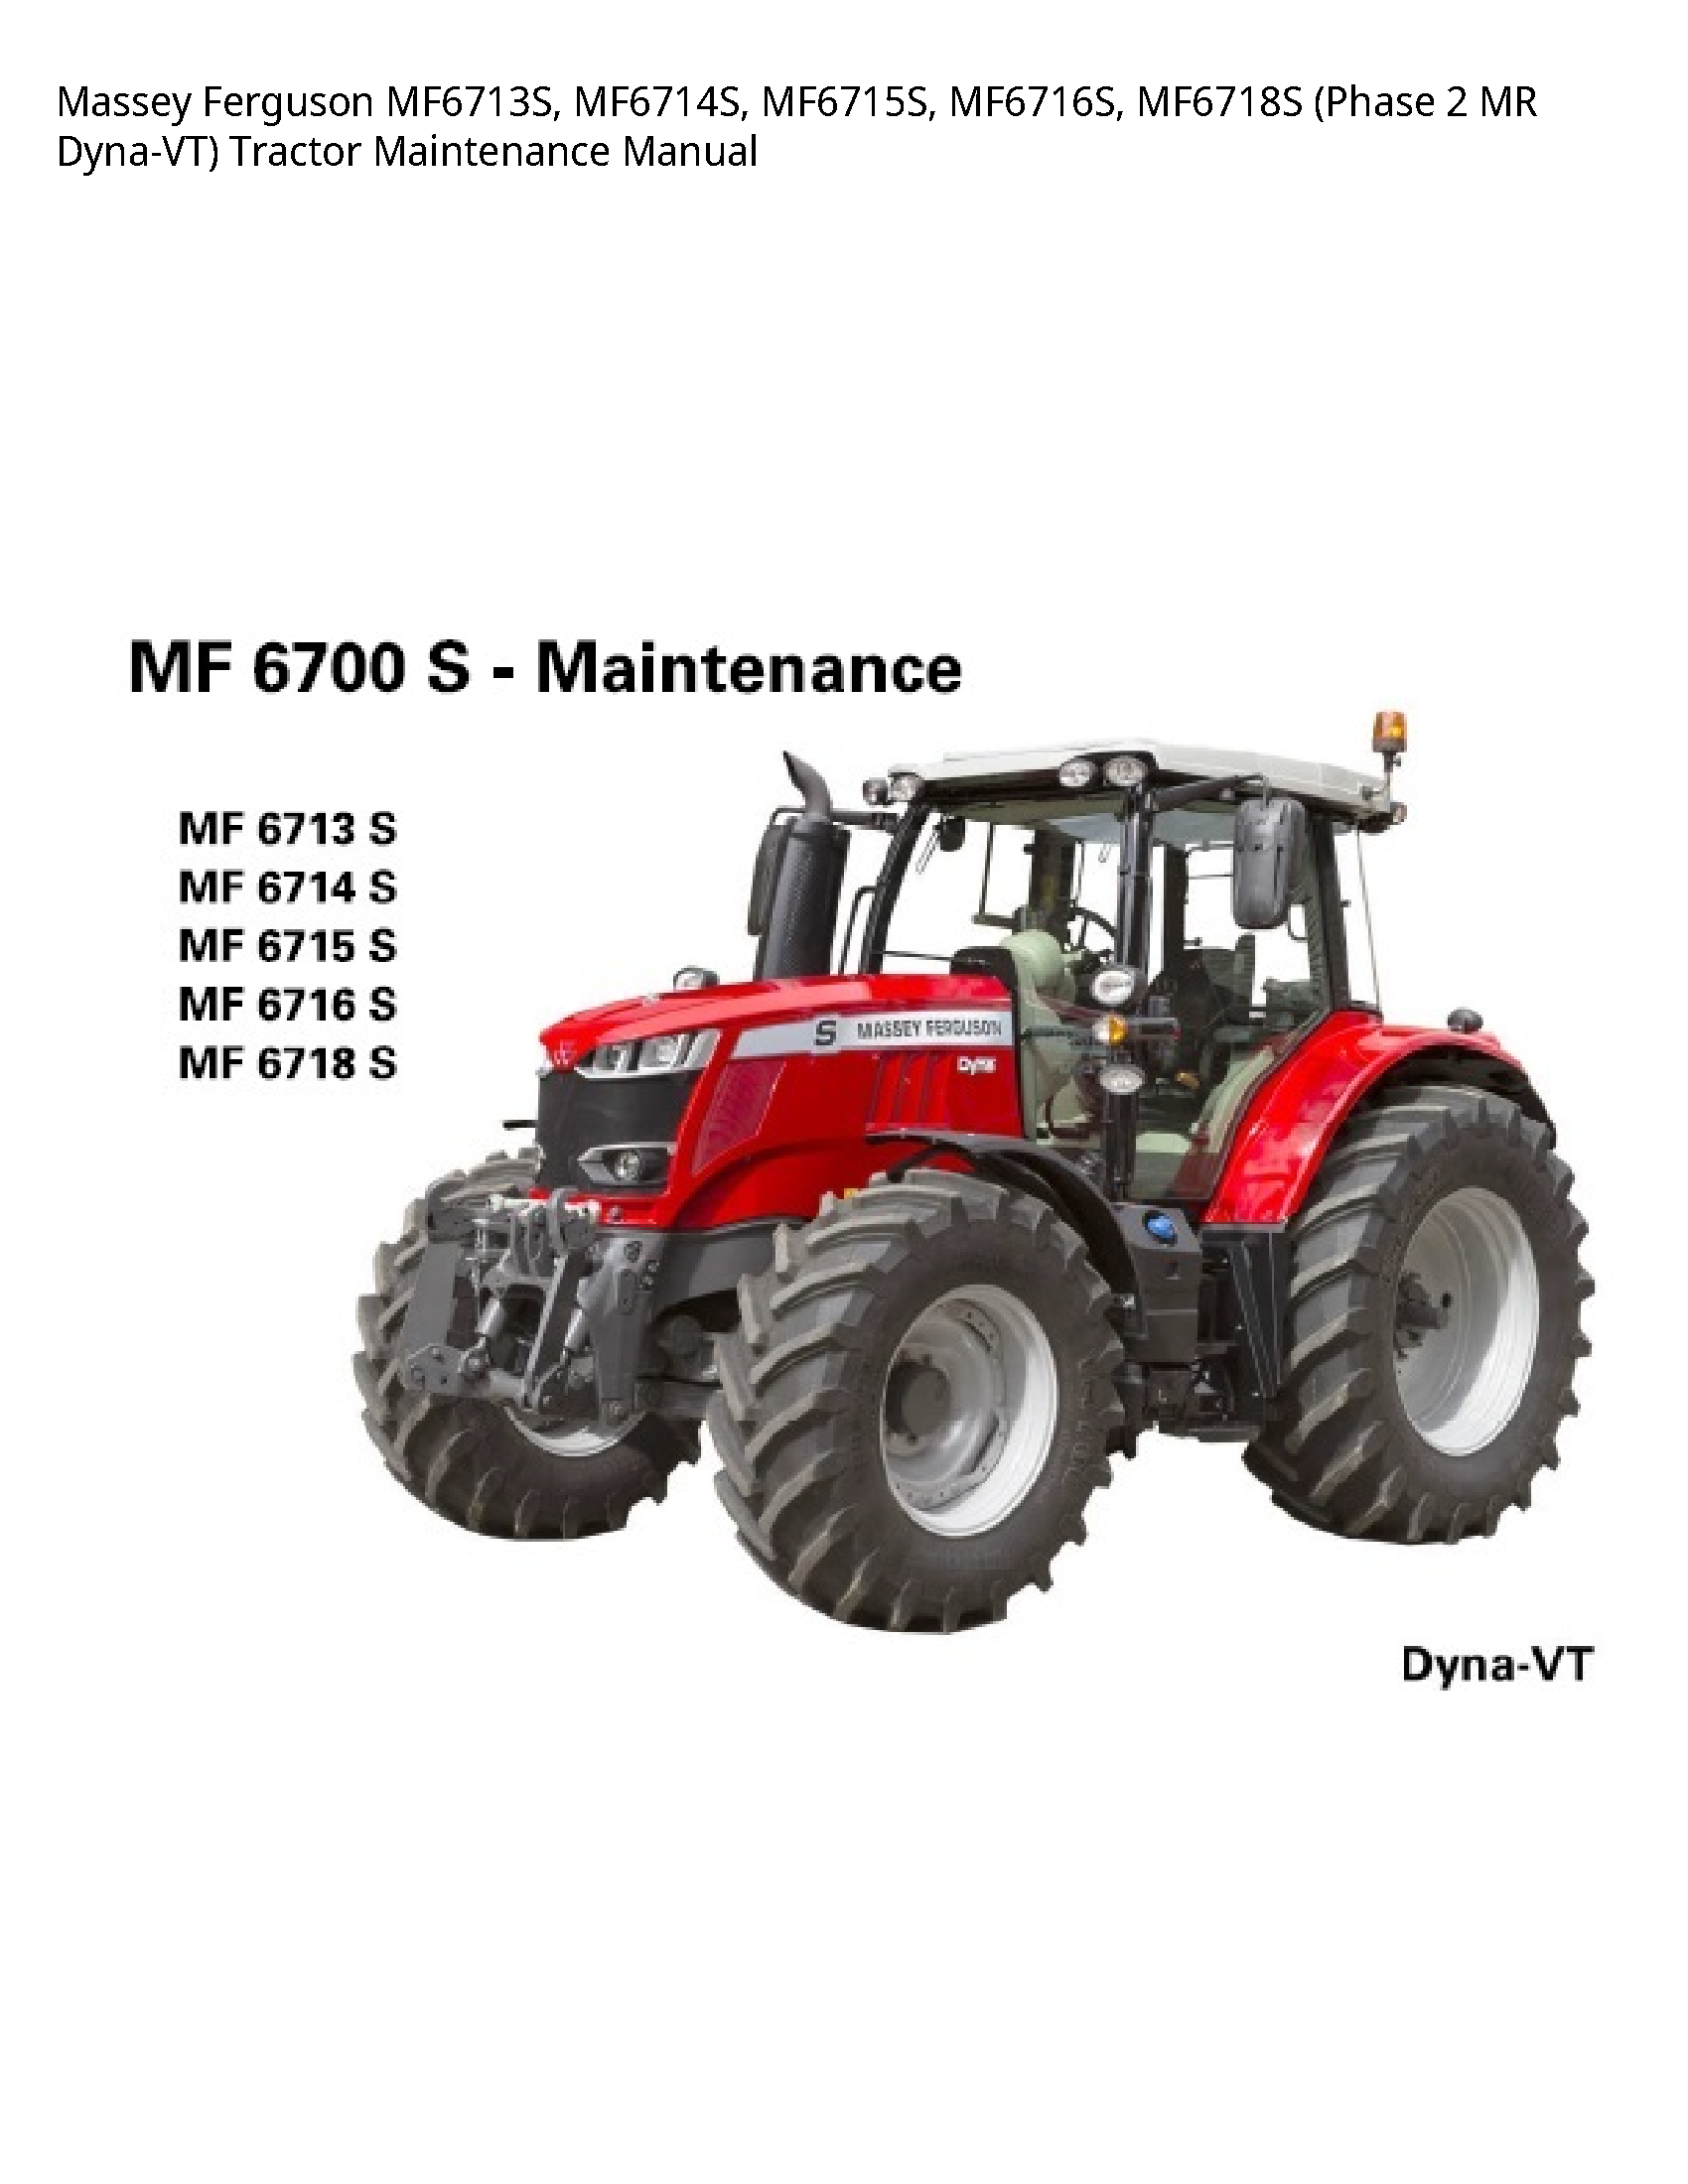 Massey Ferguson MF6713S (Phase MR Dyna-VT) Tractor Maintenance manual